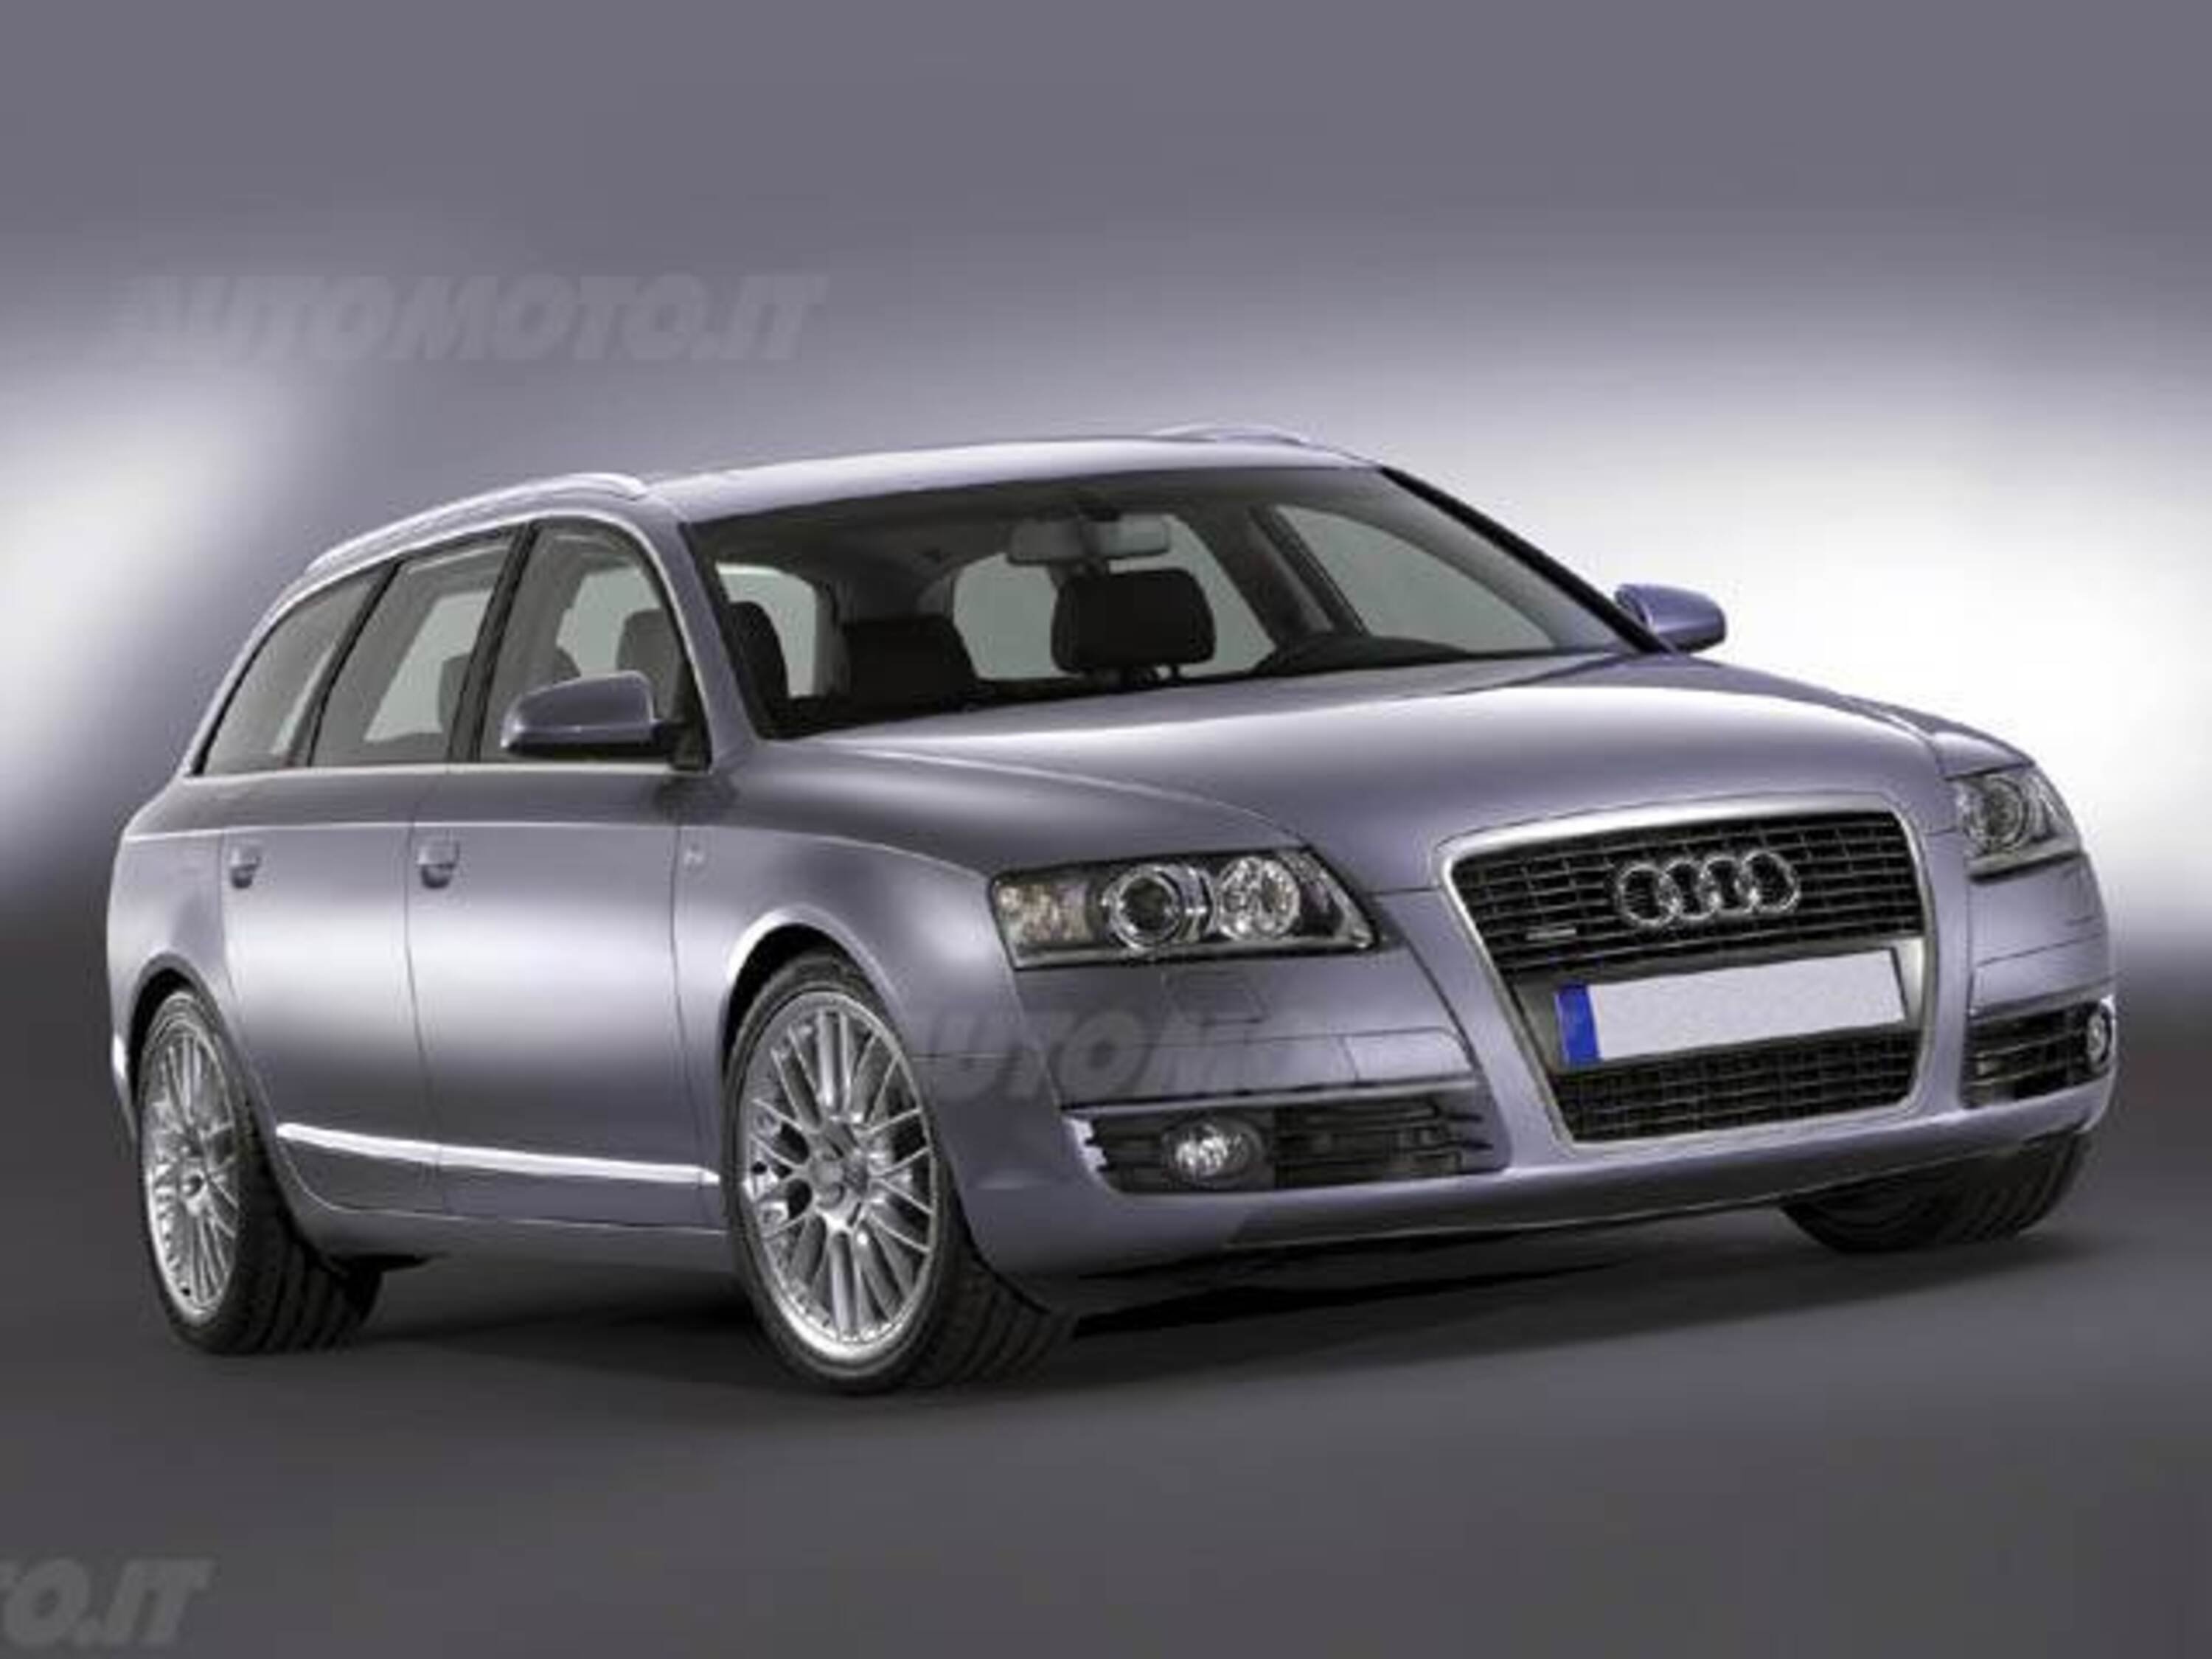 Audi A6 Avant 2.4 V6 Limited Edition